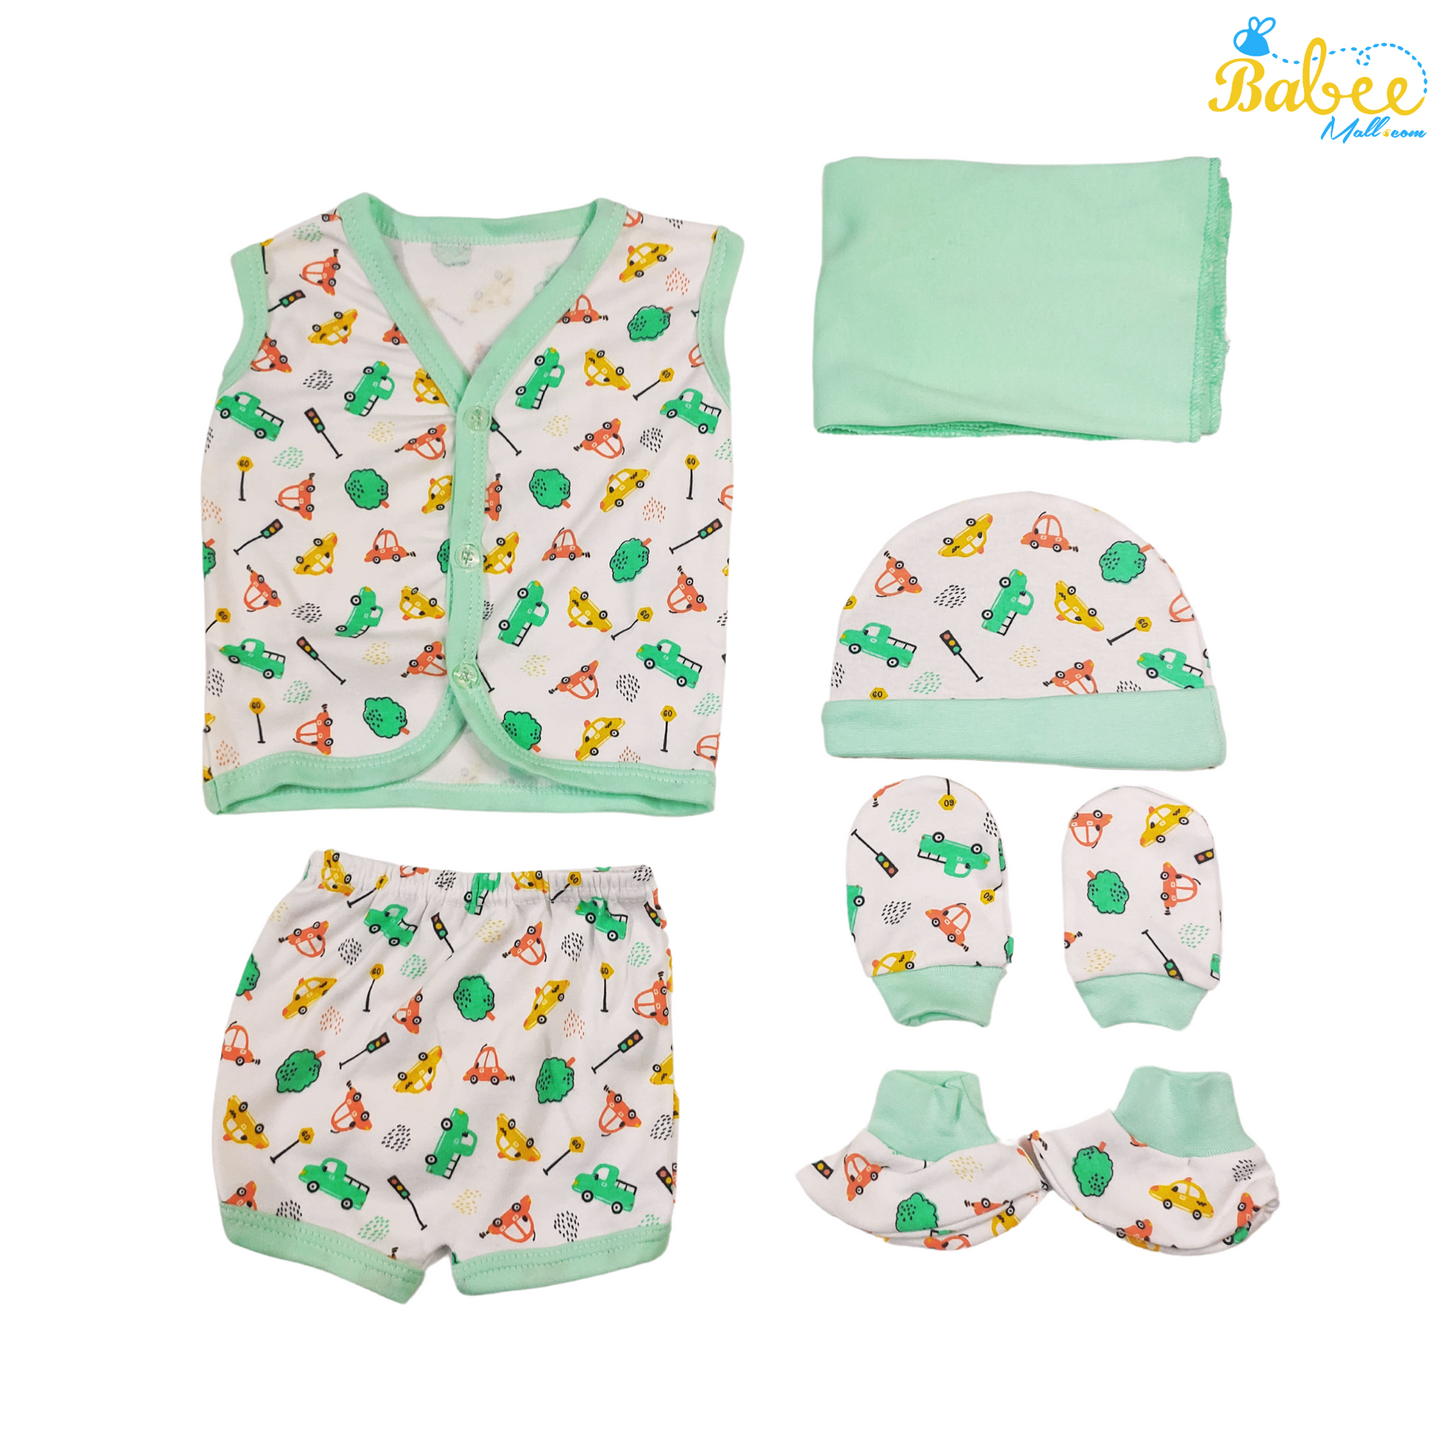 HeavenlyBundle Newborn Clothing Kit - Button Jhabla, Shorts, Cap, Mittens, Booties, and Blanket Set (Baby Green)